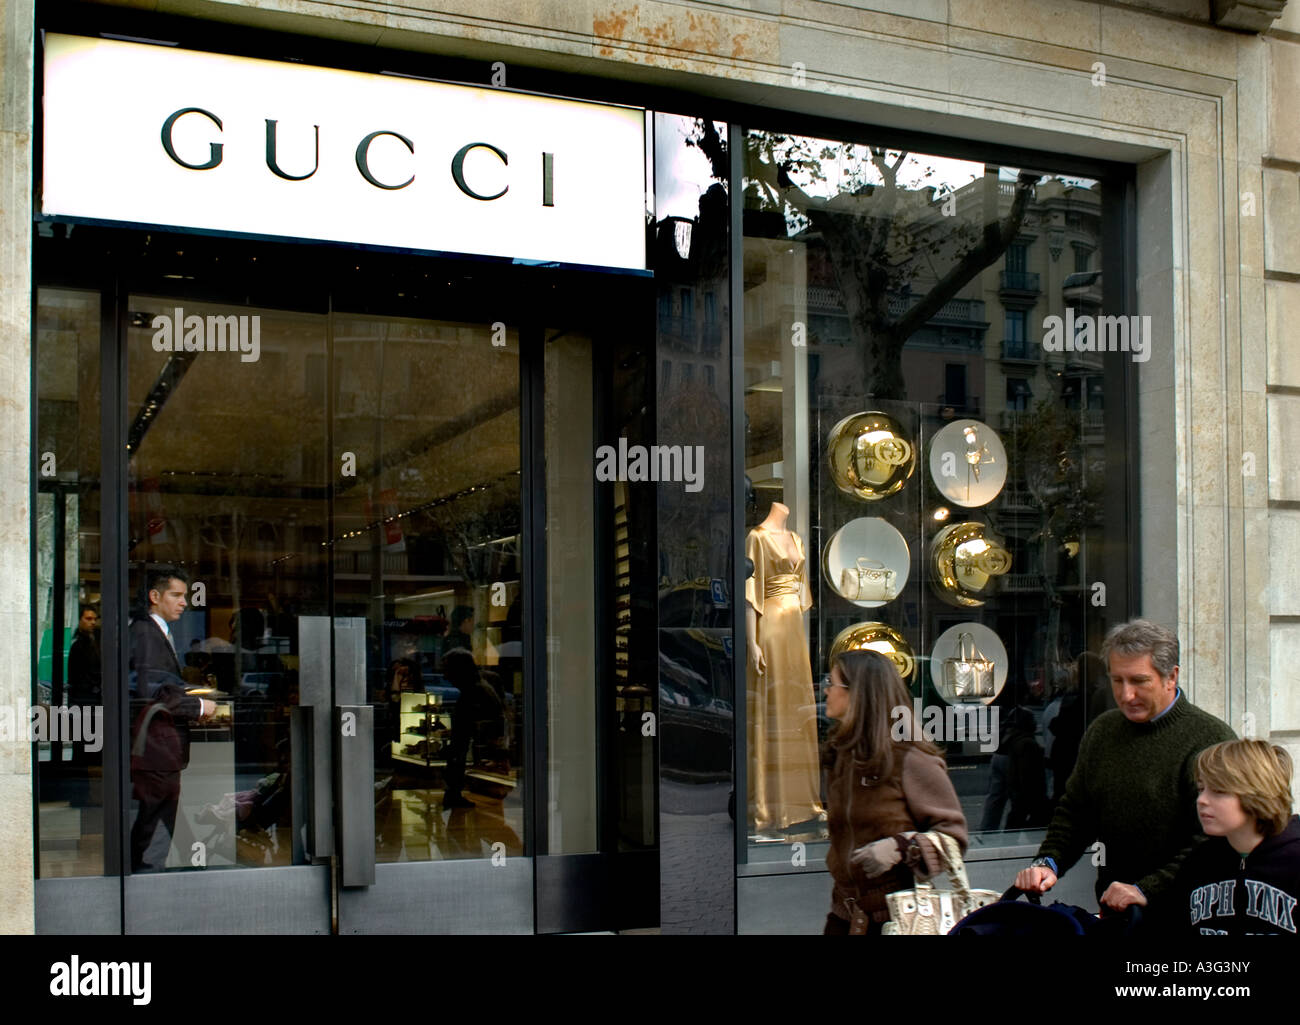 Gucci Passeig de Gracia trendy fashion luxury fashionable Barcelona Spain  Stock Photo - Alamy